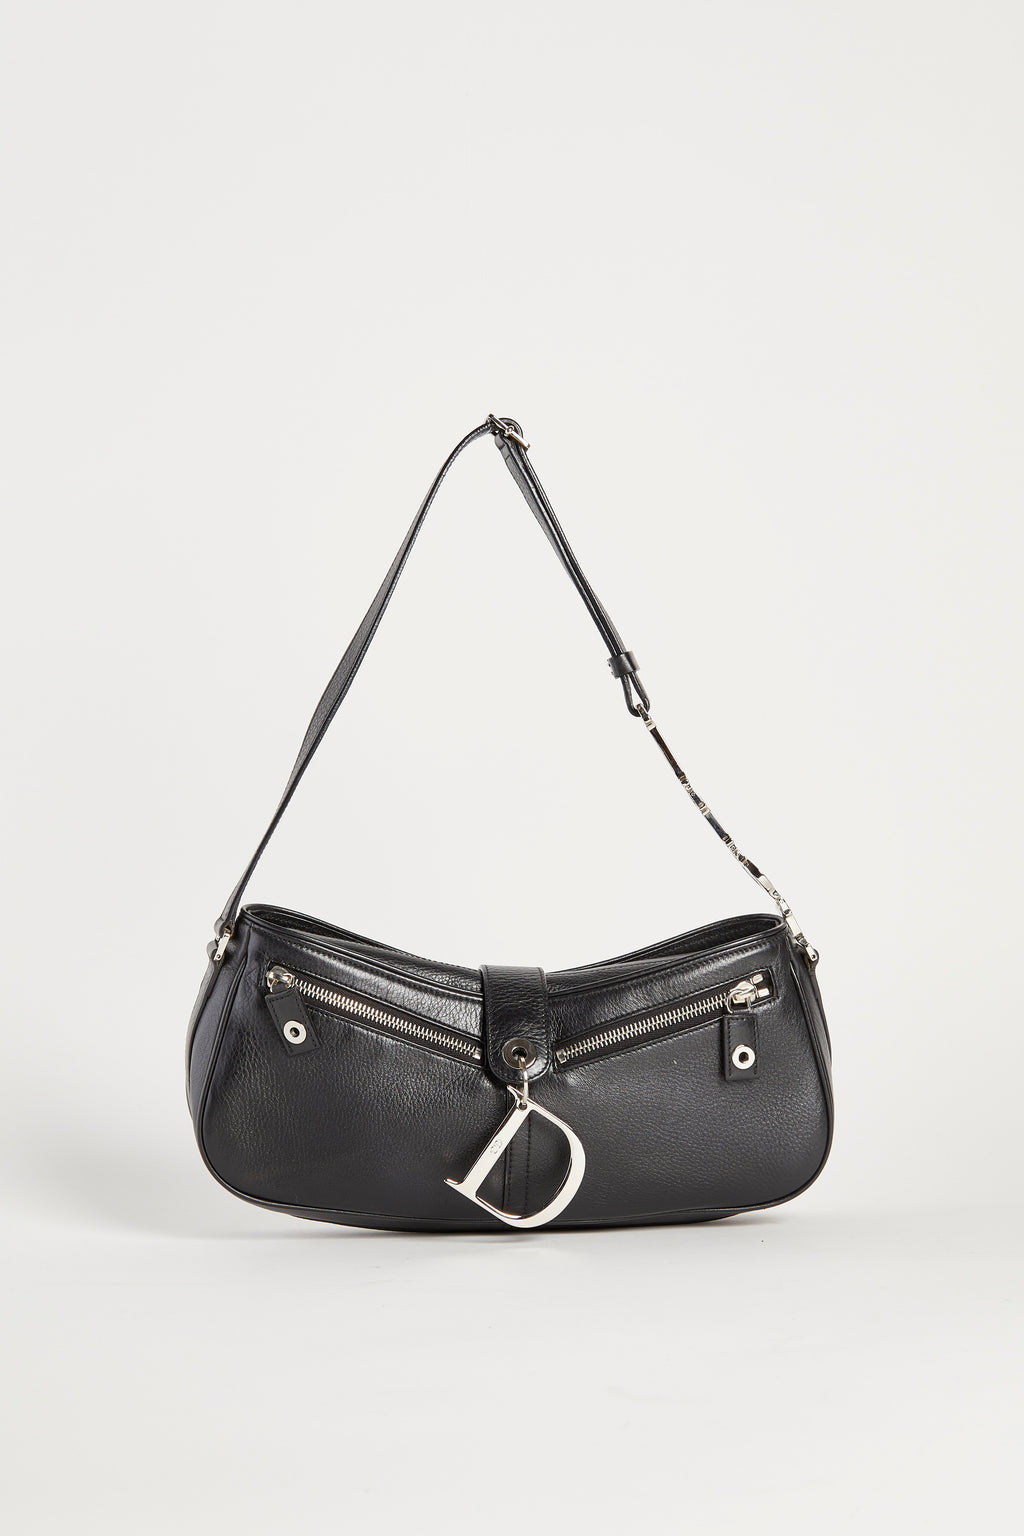 2000s Christian Dior Black Leather Spell-out Shoulder Bag